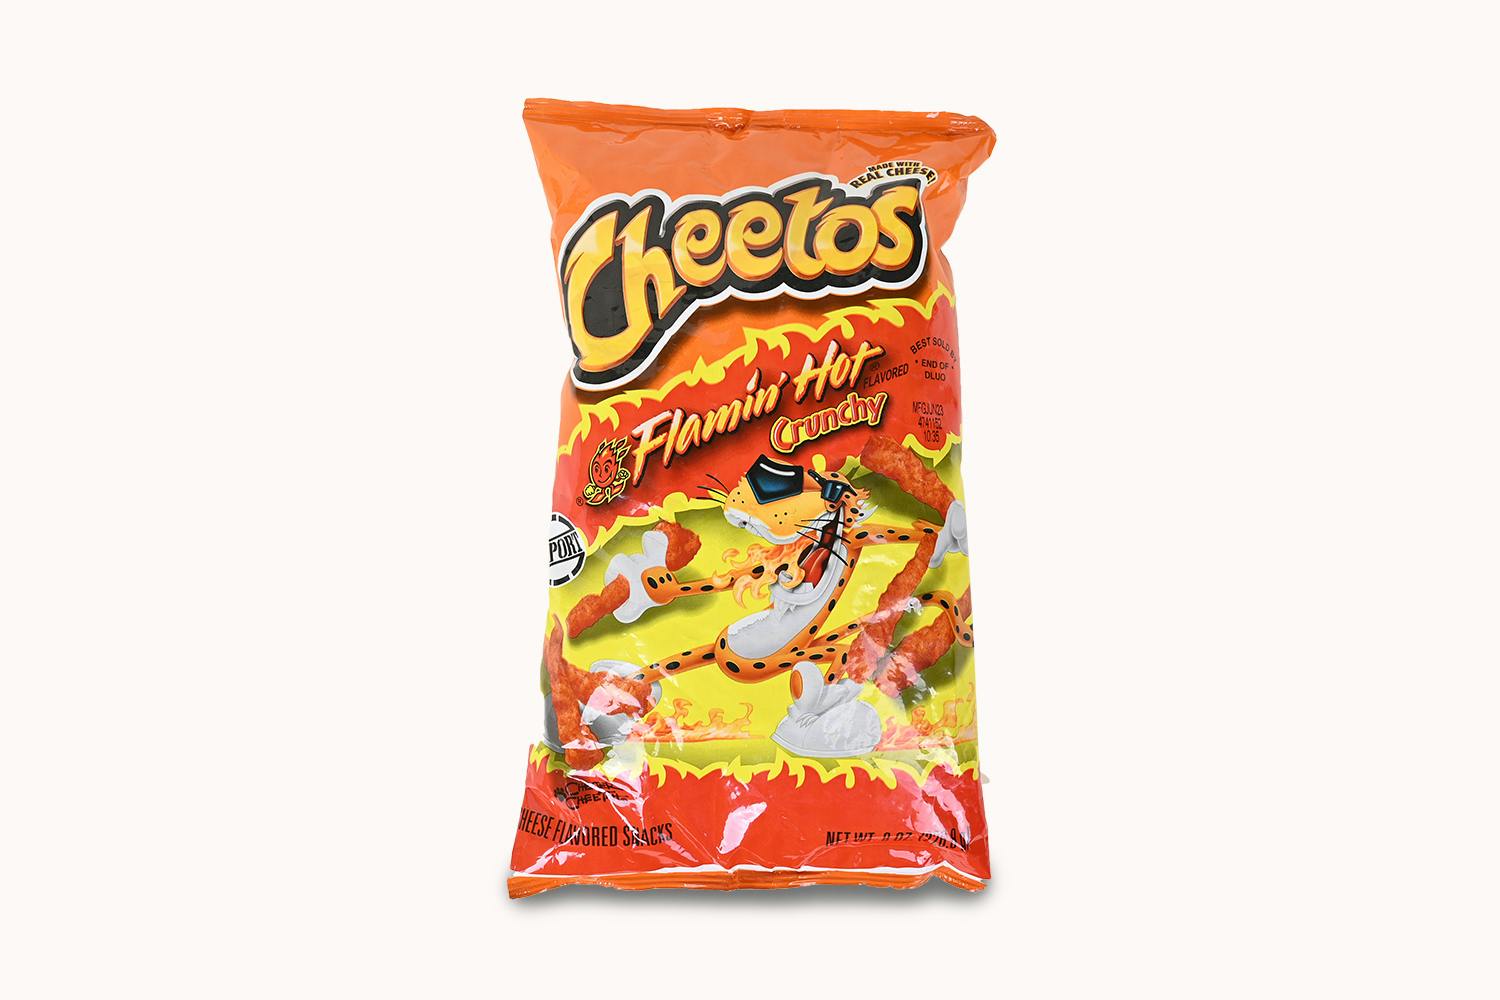 Cheetos Snack Cheddar Jalapeno